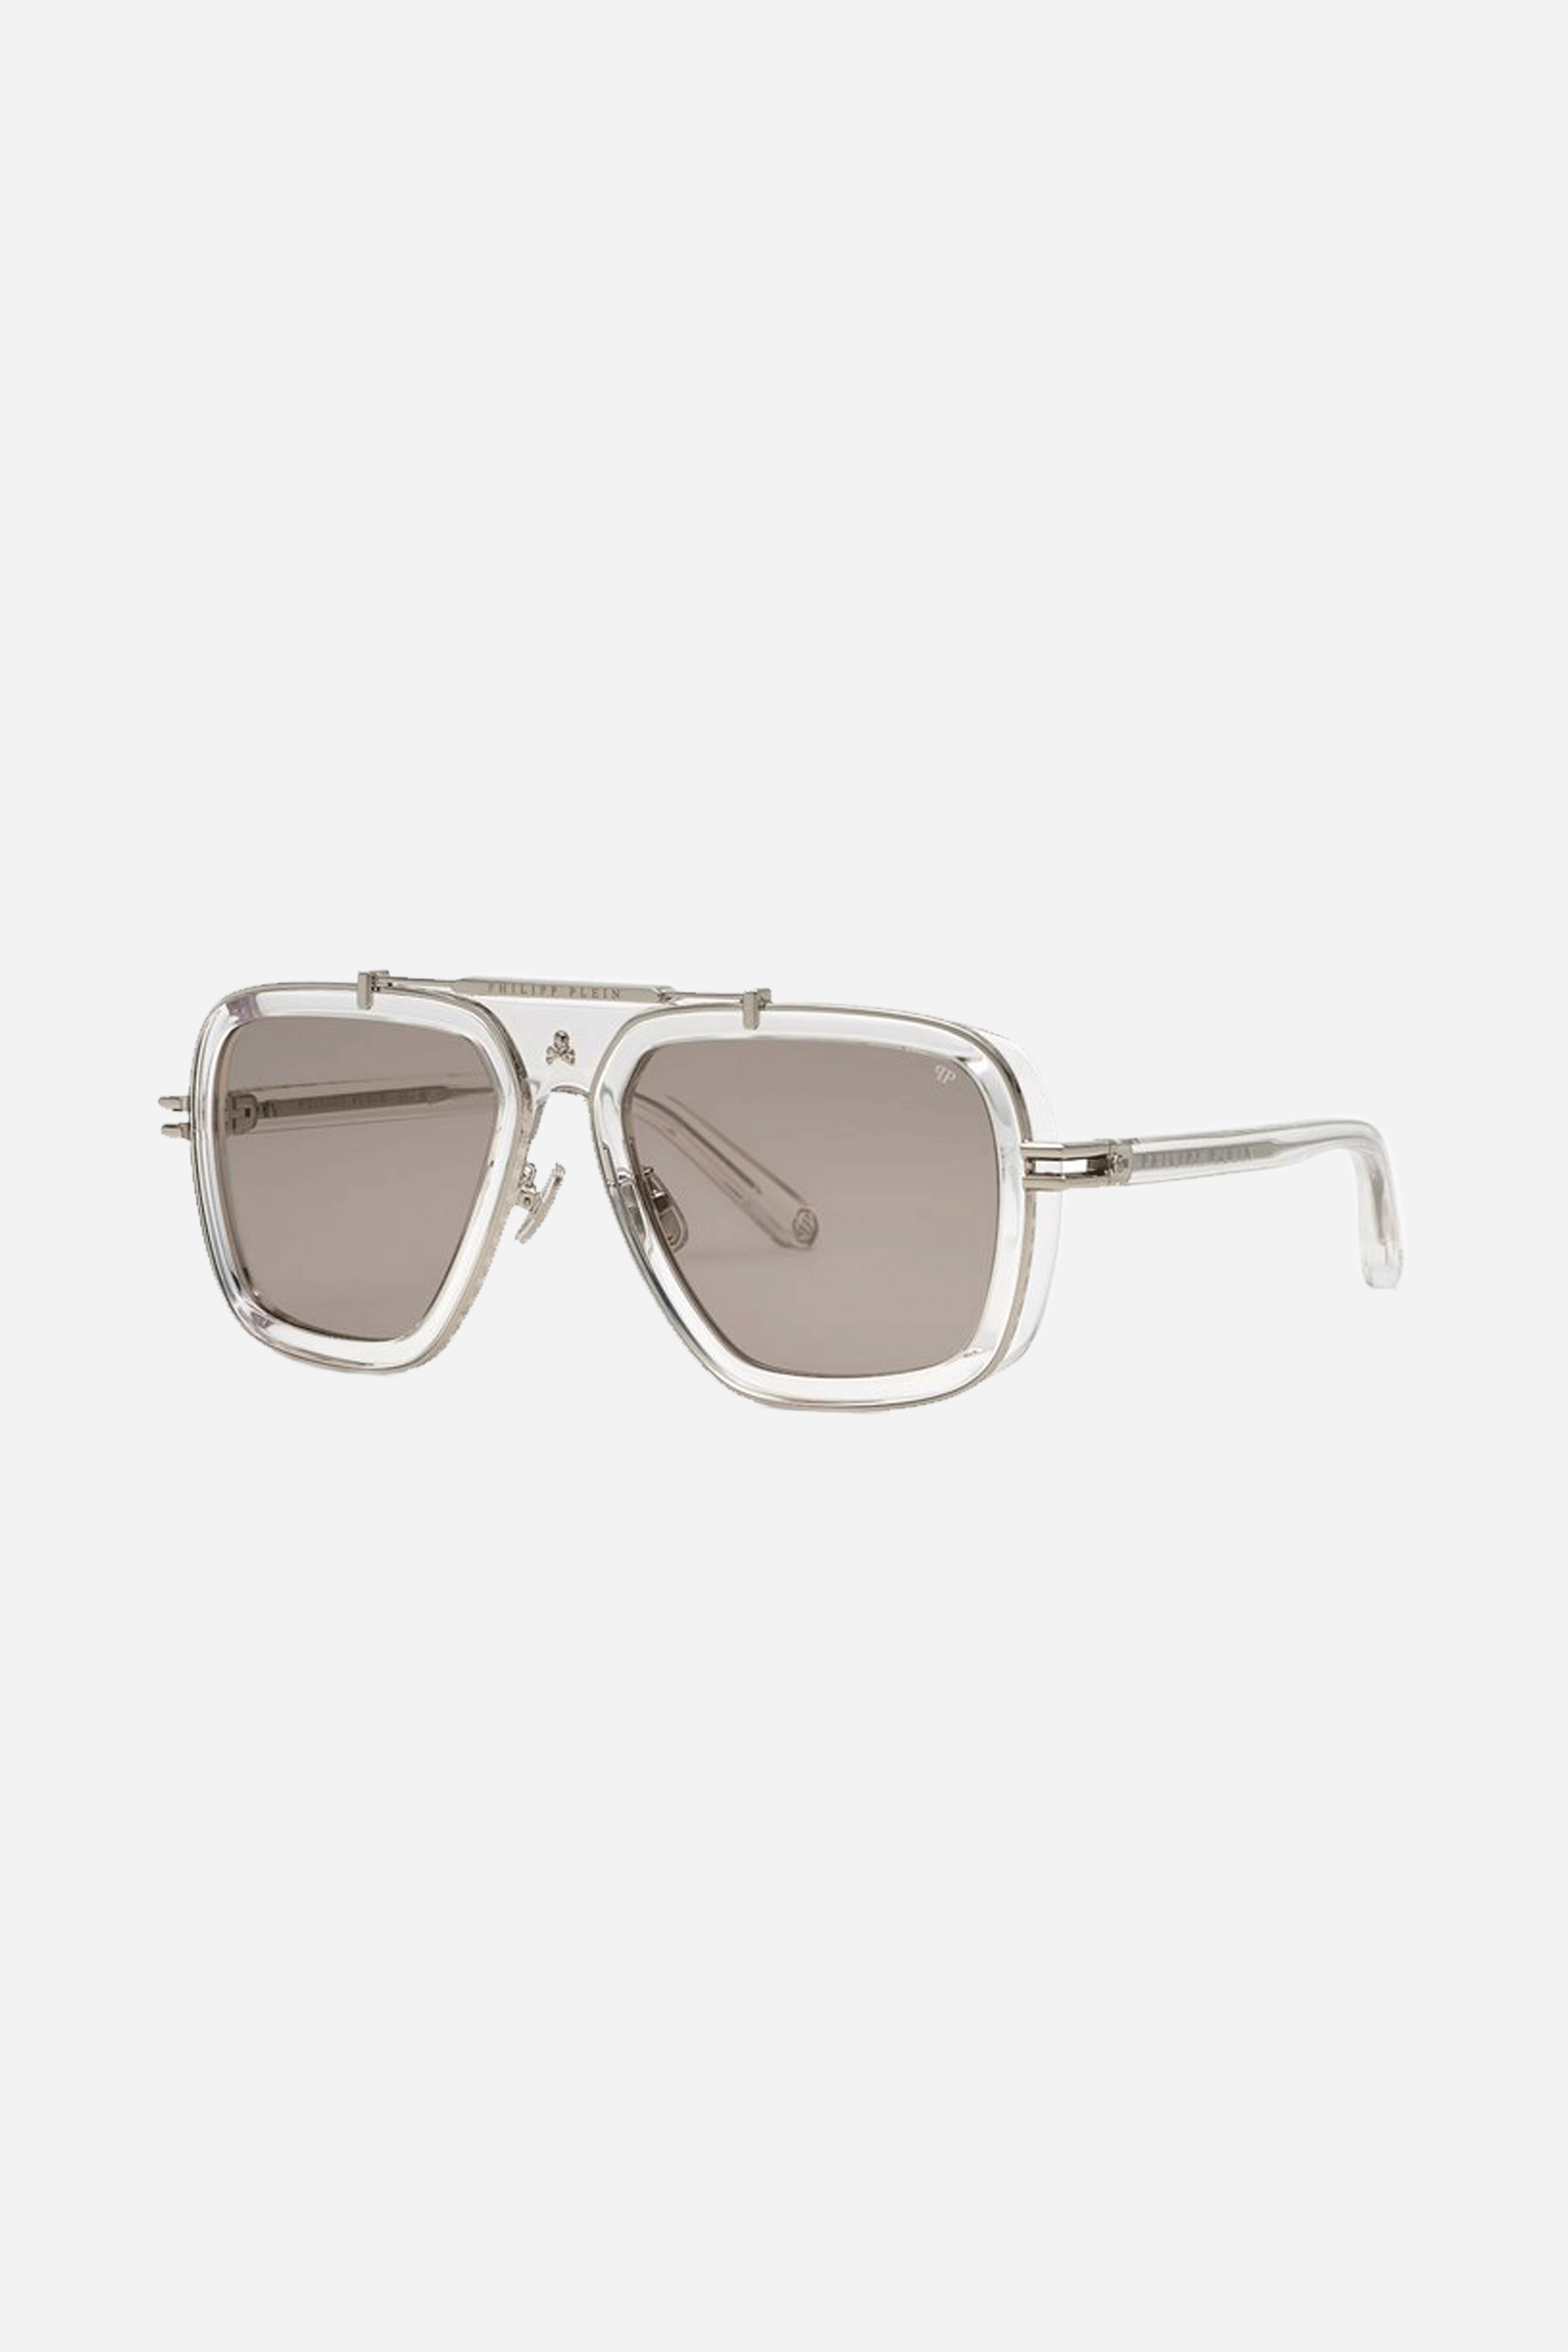 Philipp Plein pilot combined grey sunglasses - Eyewear Club